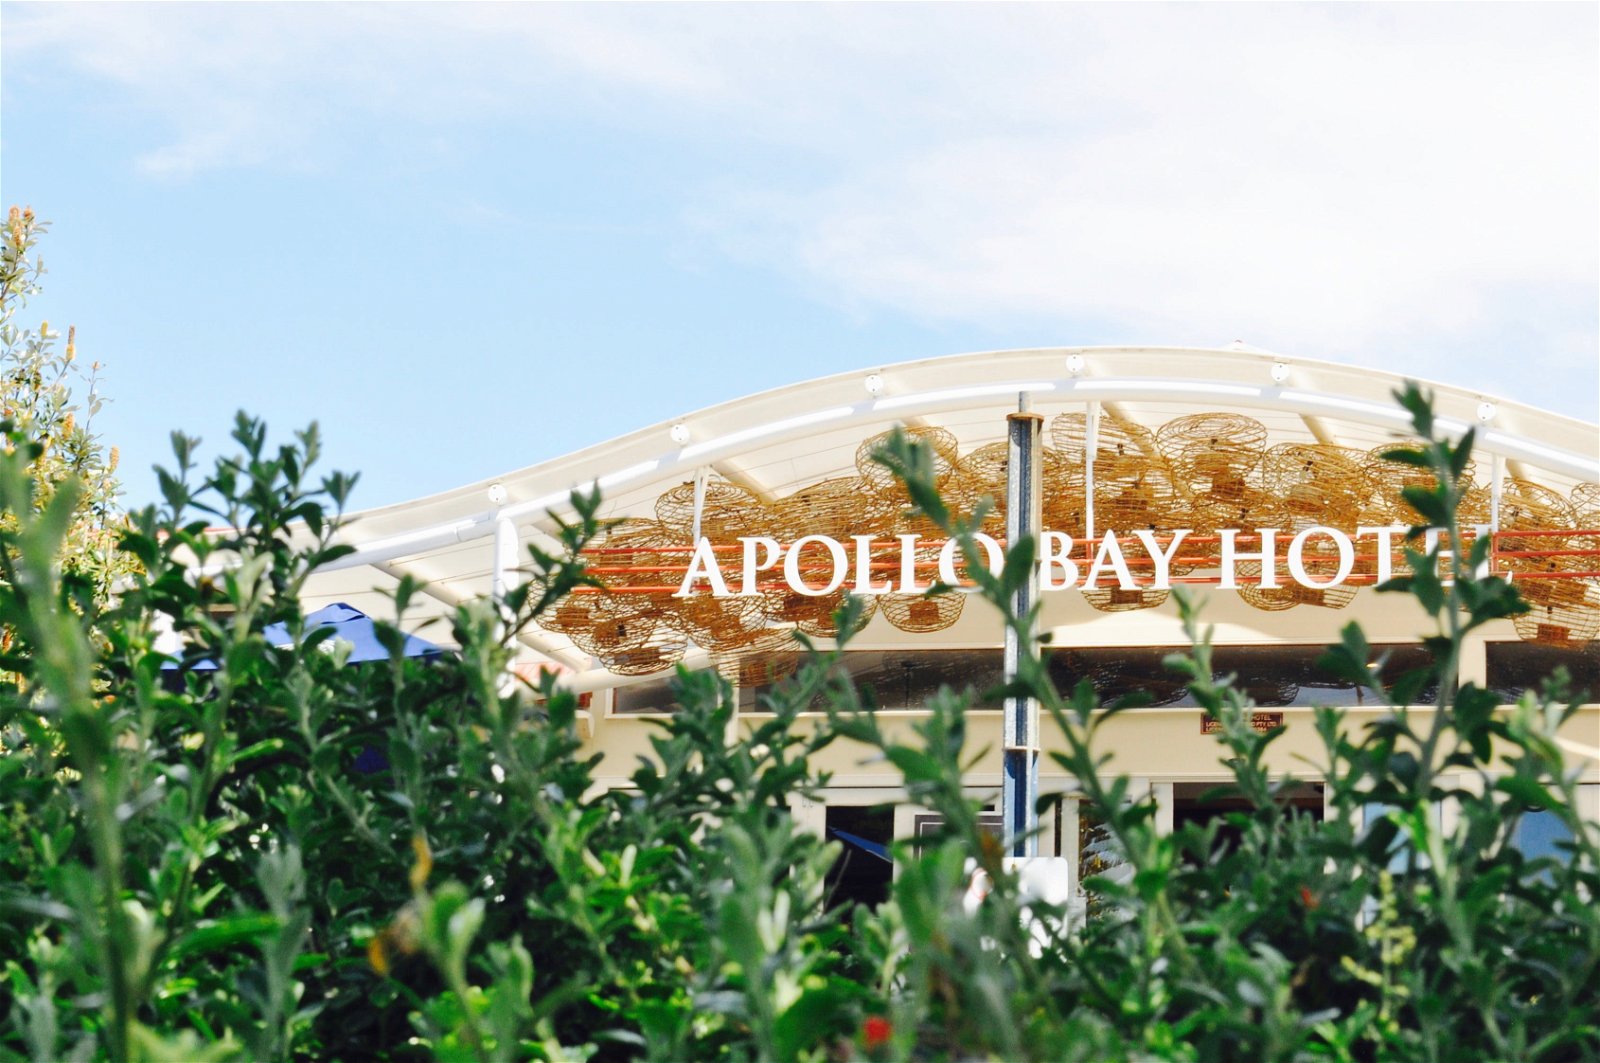 Apollo Bay Hotel - Accommodation BNB